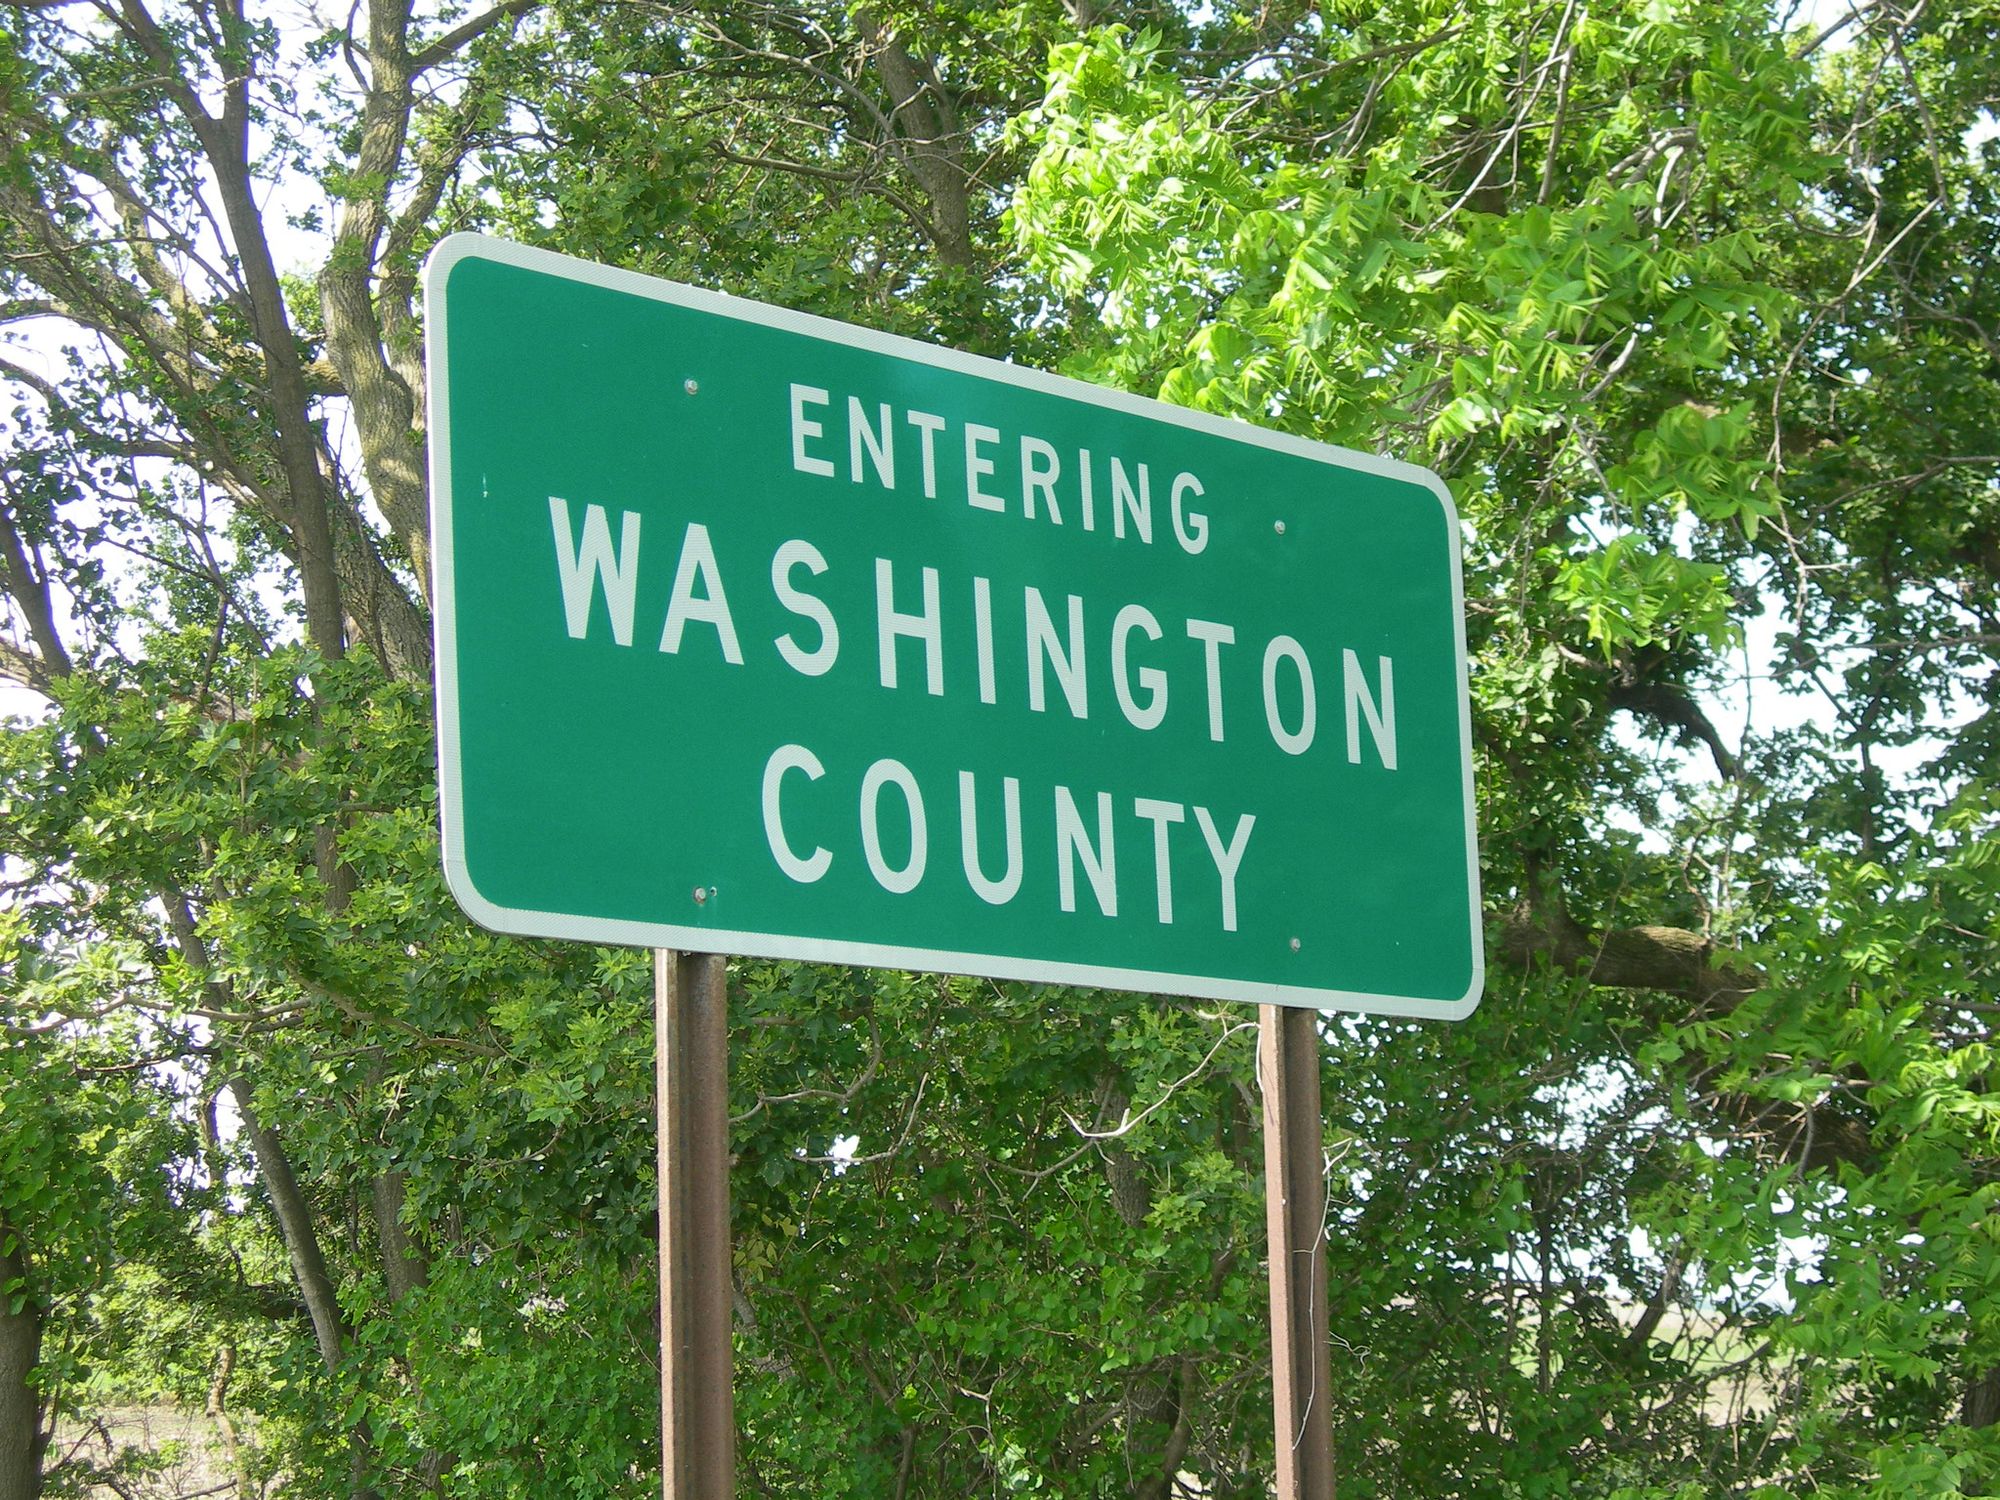 Counties named Washington